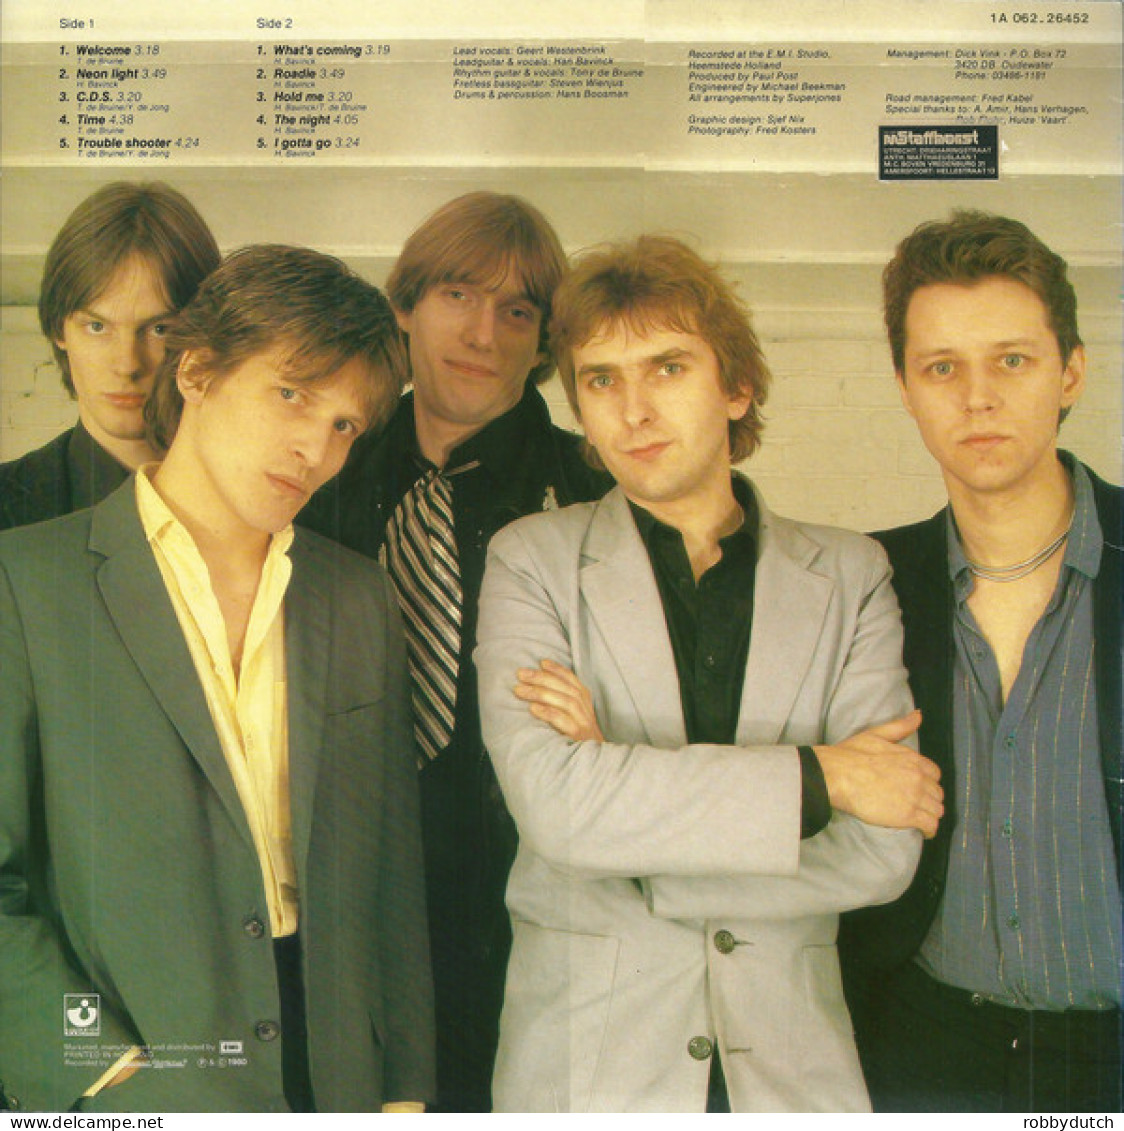 * LP *  SUPERJONES - SAME (Holland 1980 ) - Disco, Pop